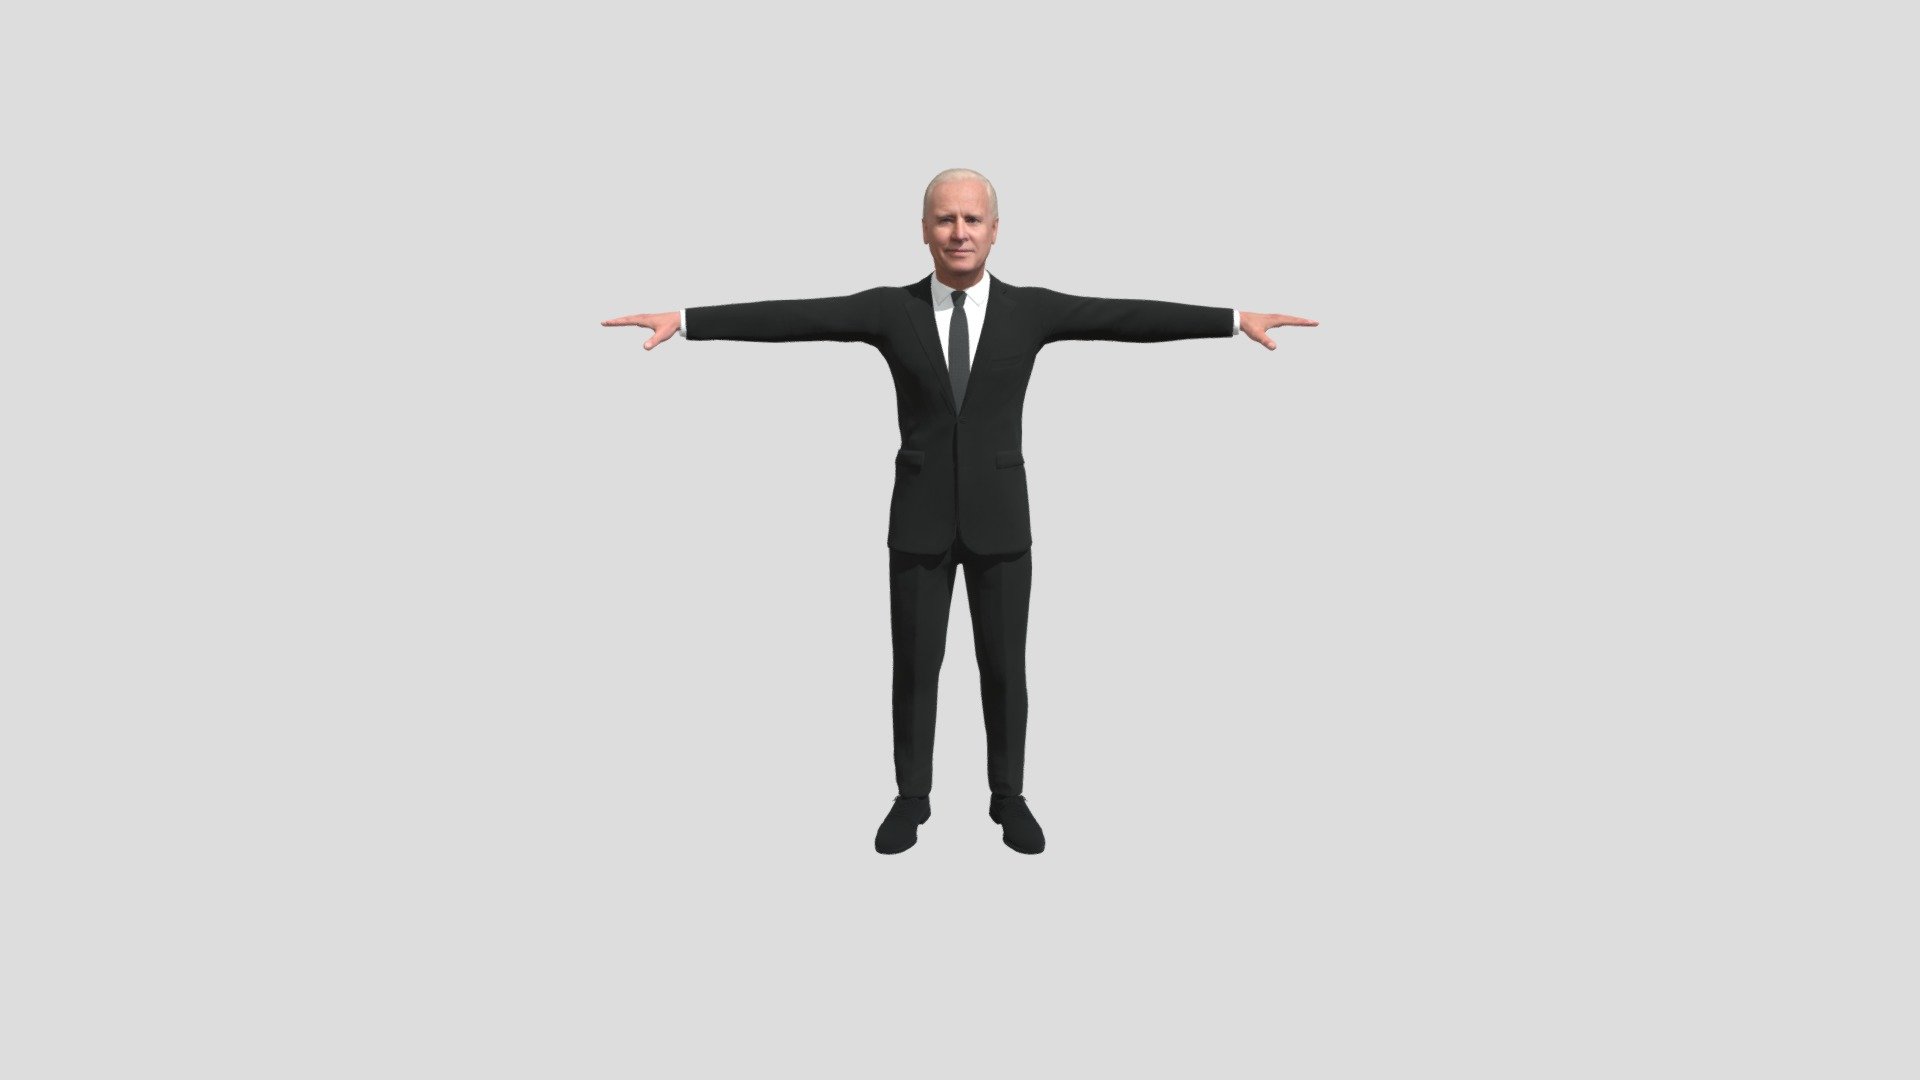 fully rigged 3d model - Joe Biden - Buy Royalty Free 3D model by Daniel.Pikl 3d model